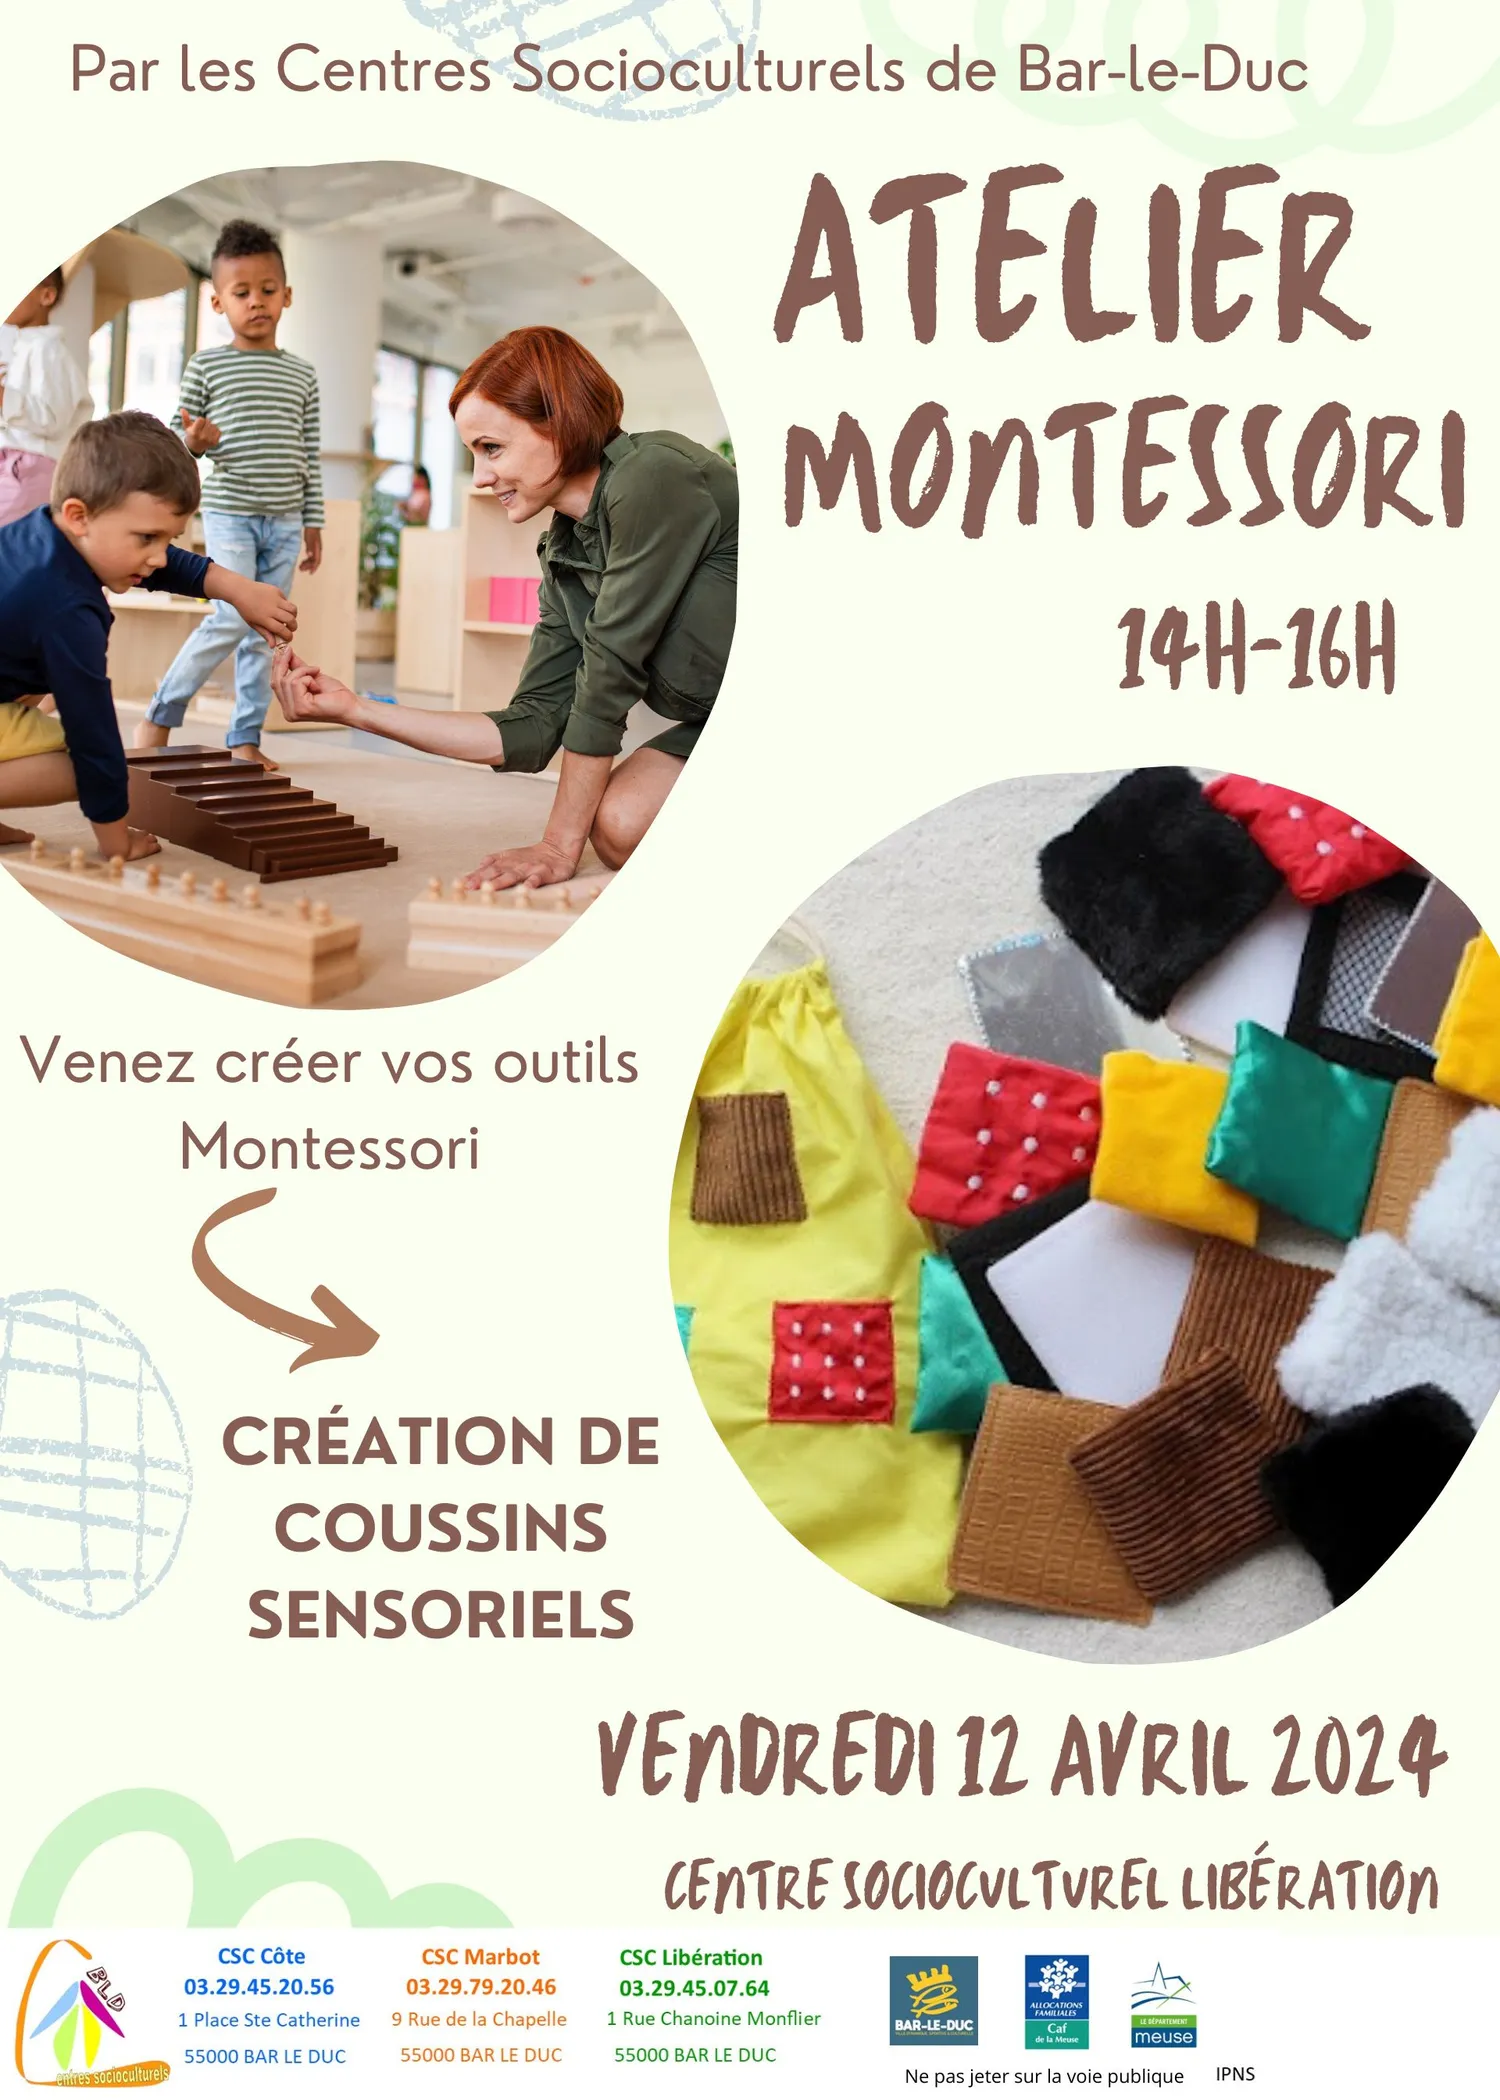 Image qui illustre: Atelier Montessori à Bar-le-Duc - 0